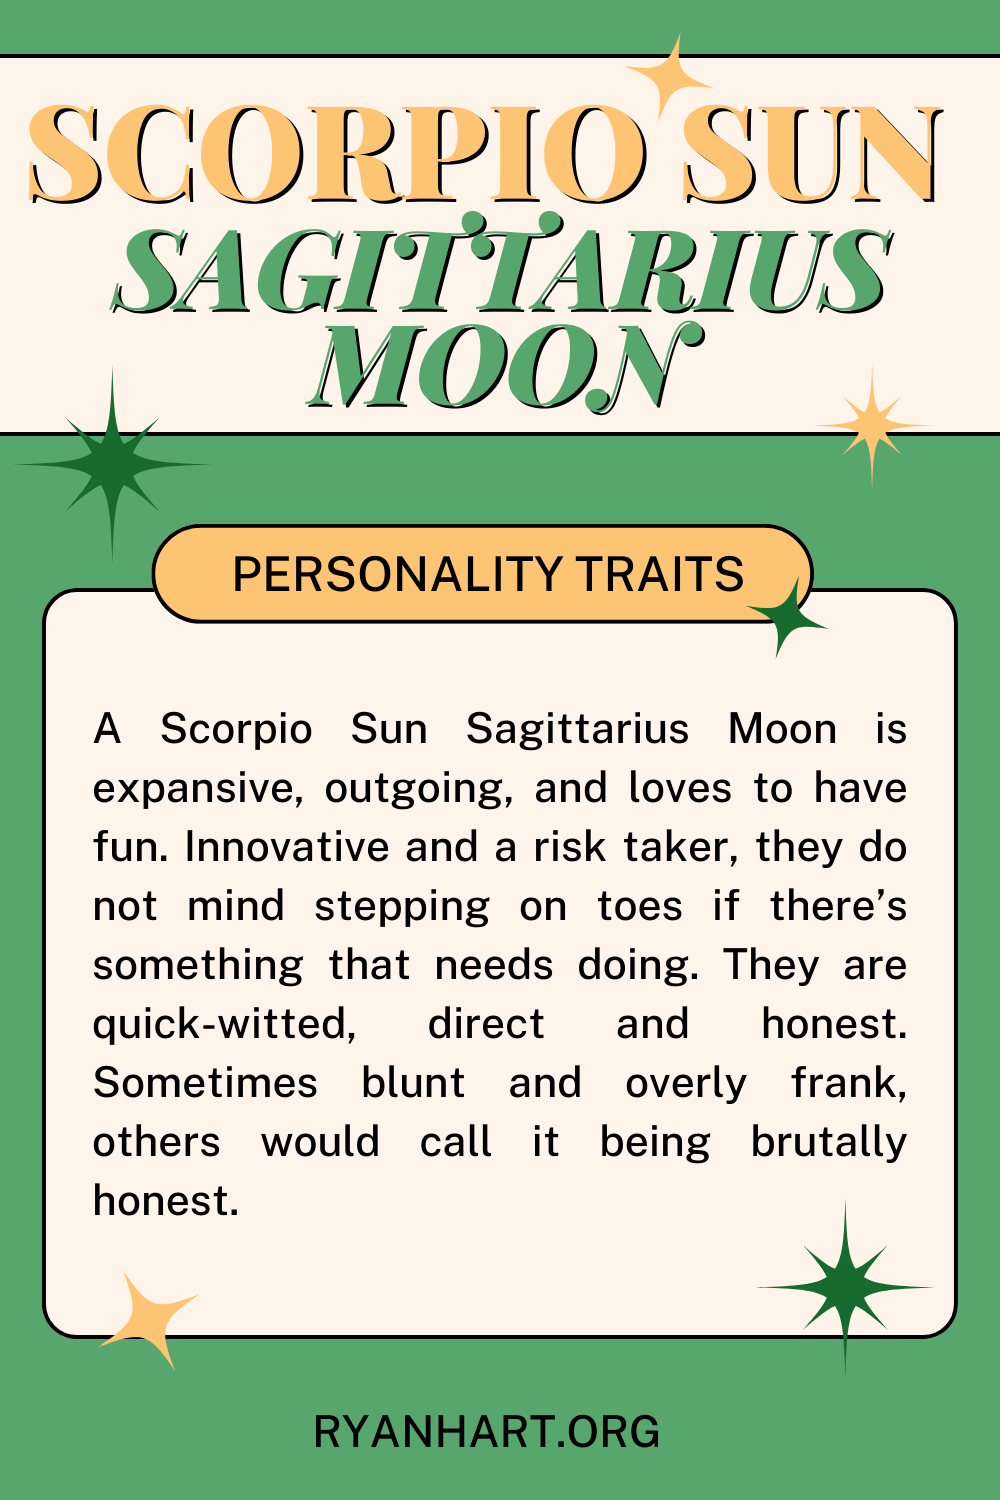  Ciri-ciri Personaliti Scorpio Sun Sagittarius Moon